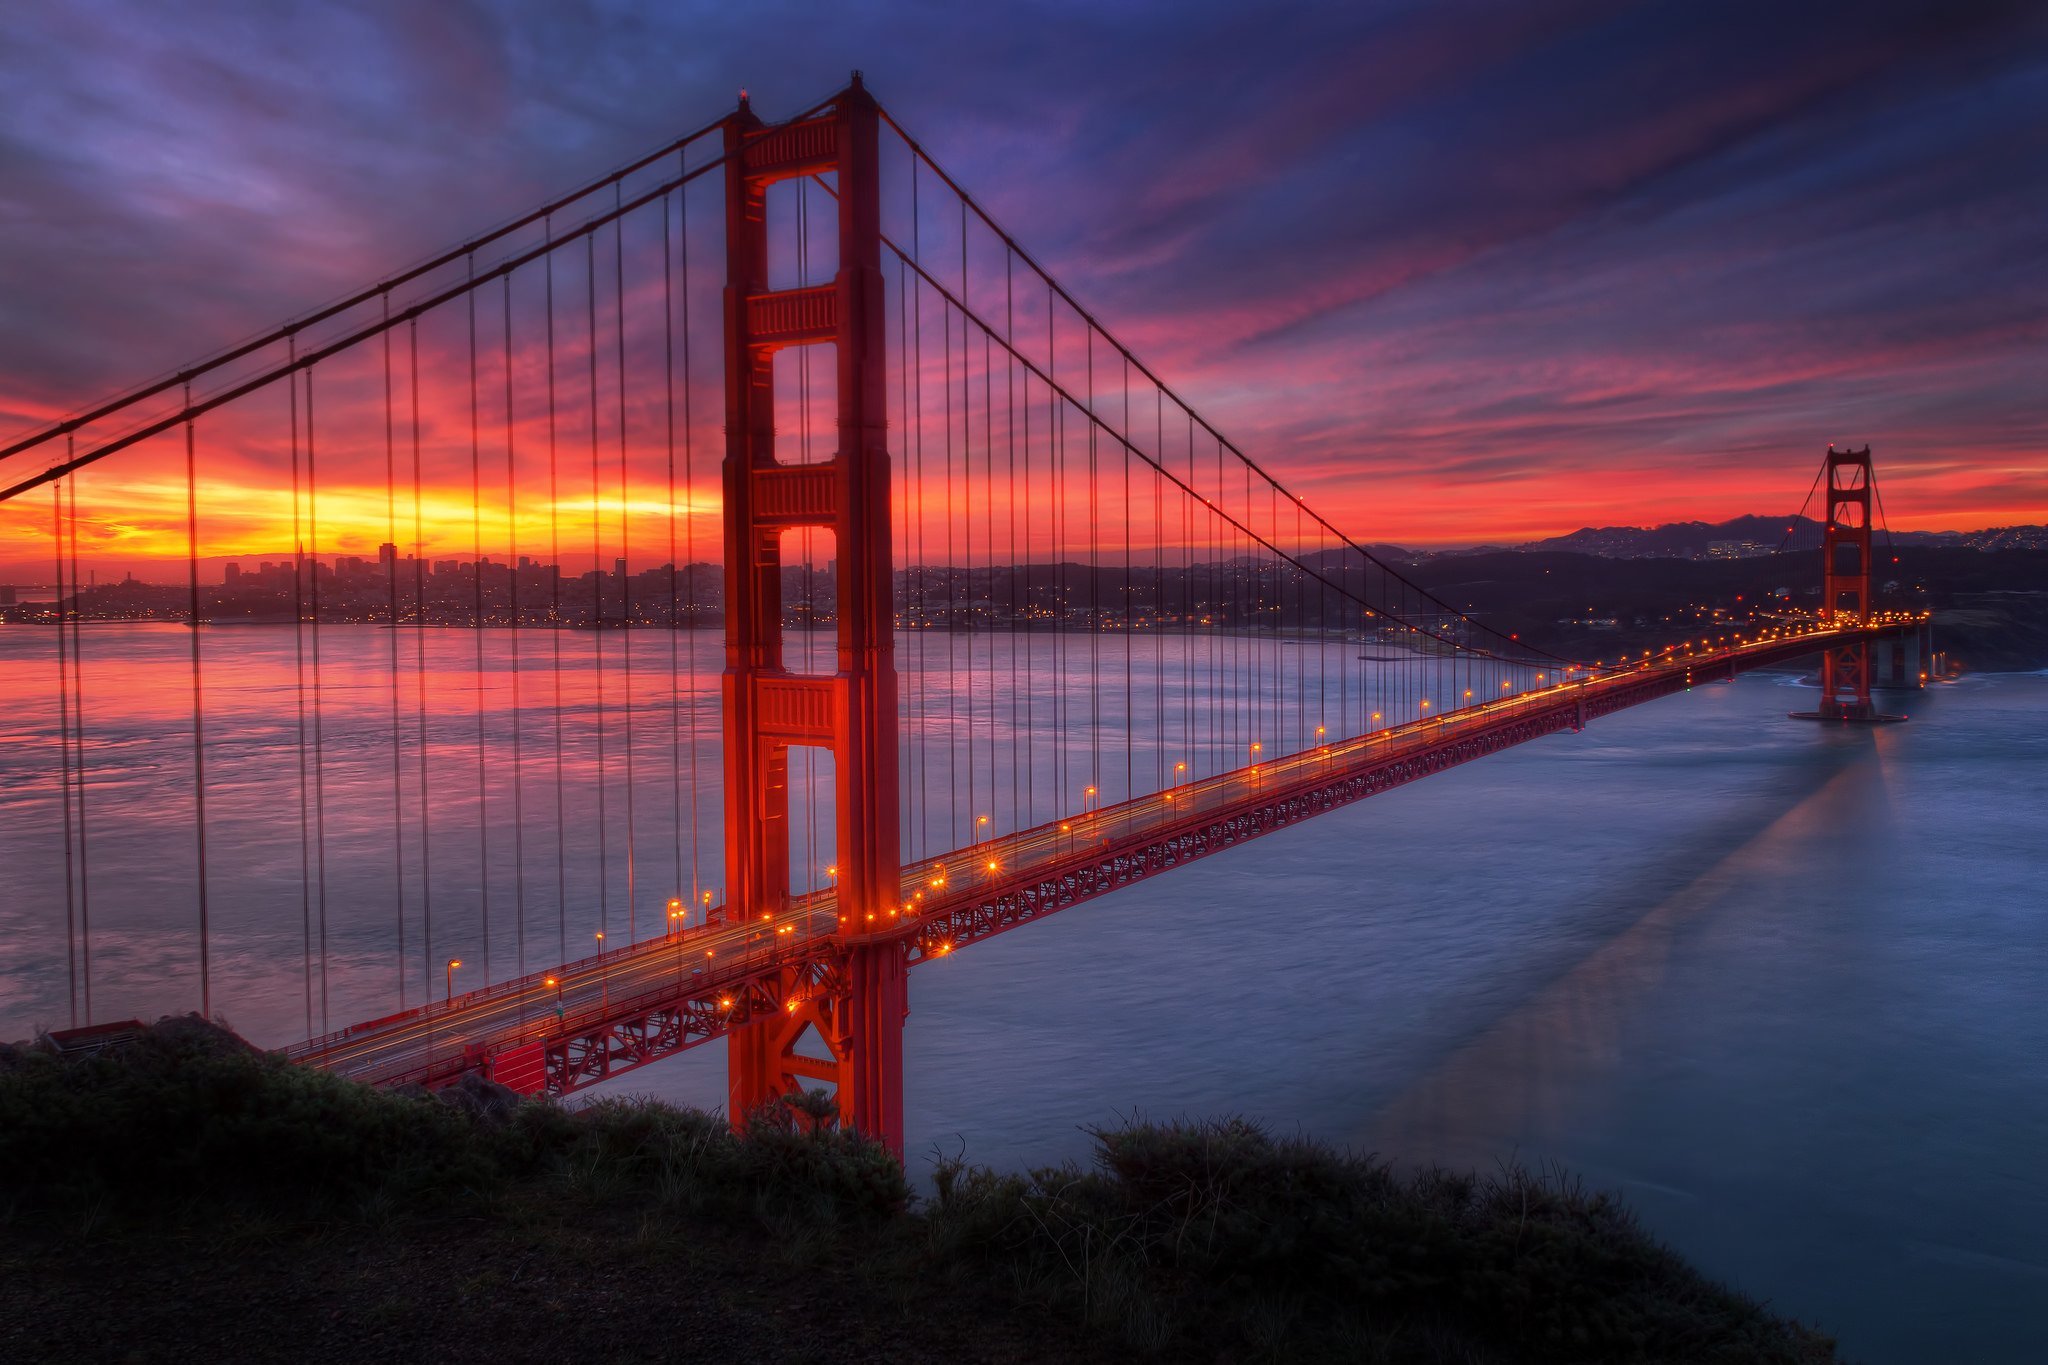 Американский мост. Мост Сан Франциско. Мост золотые ворота в Сан-Франциско. Мост «золотые ворота», Сан-Франциско, Калифорния, США. Мост Голден гейт Сан Франциско.